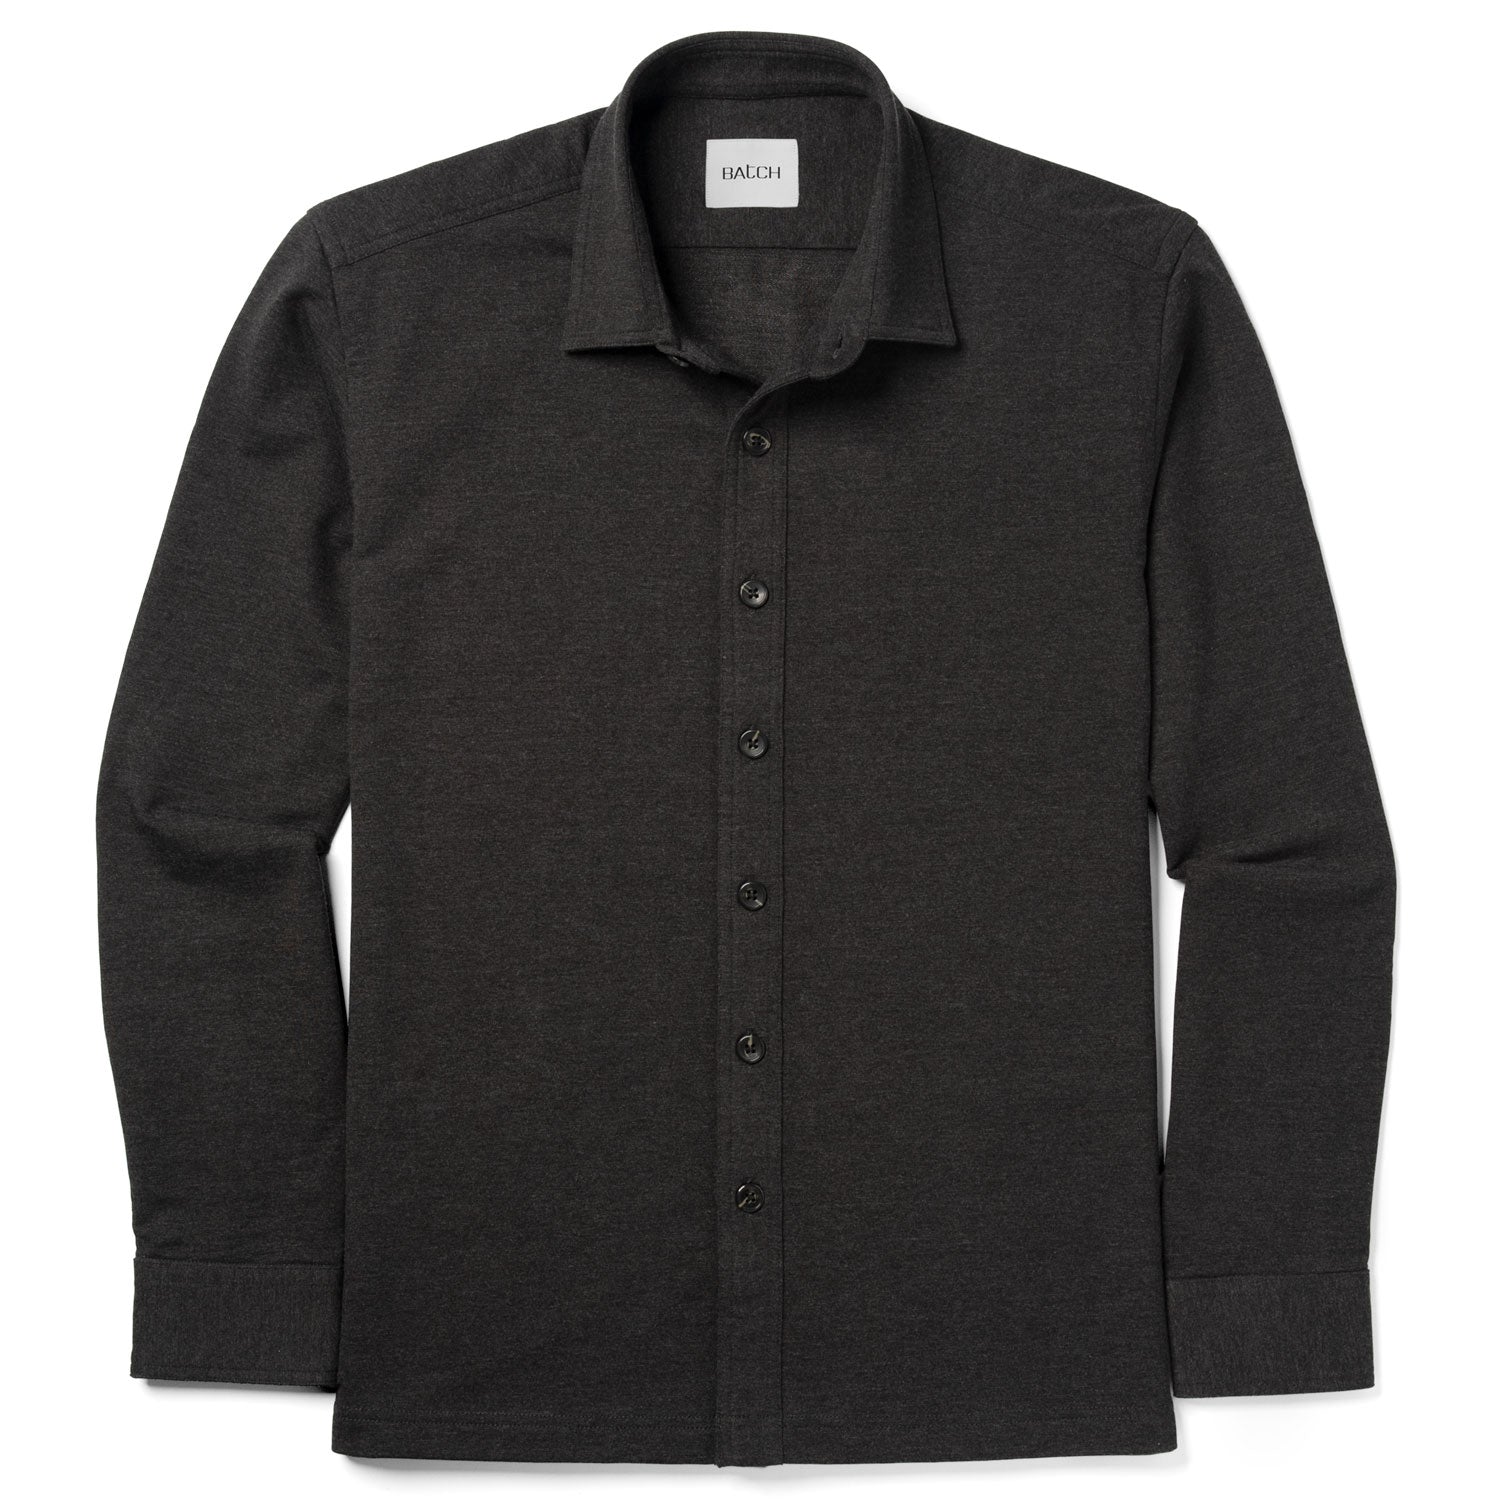 Essential Sweatshirt Shirt - Asphalt Gray Cotton French Terry